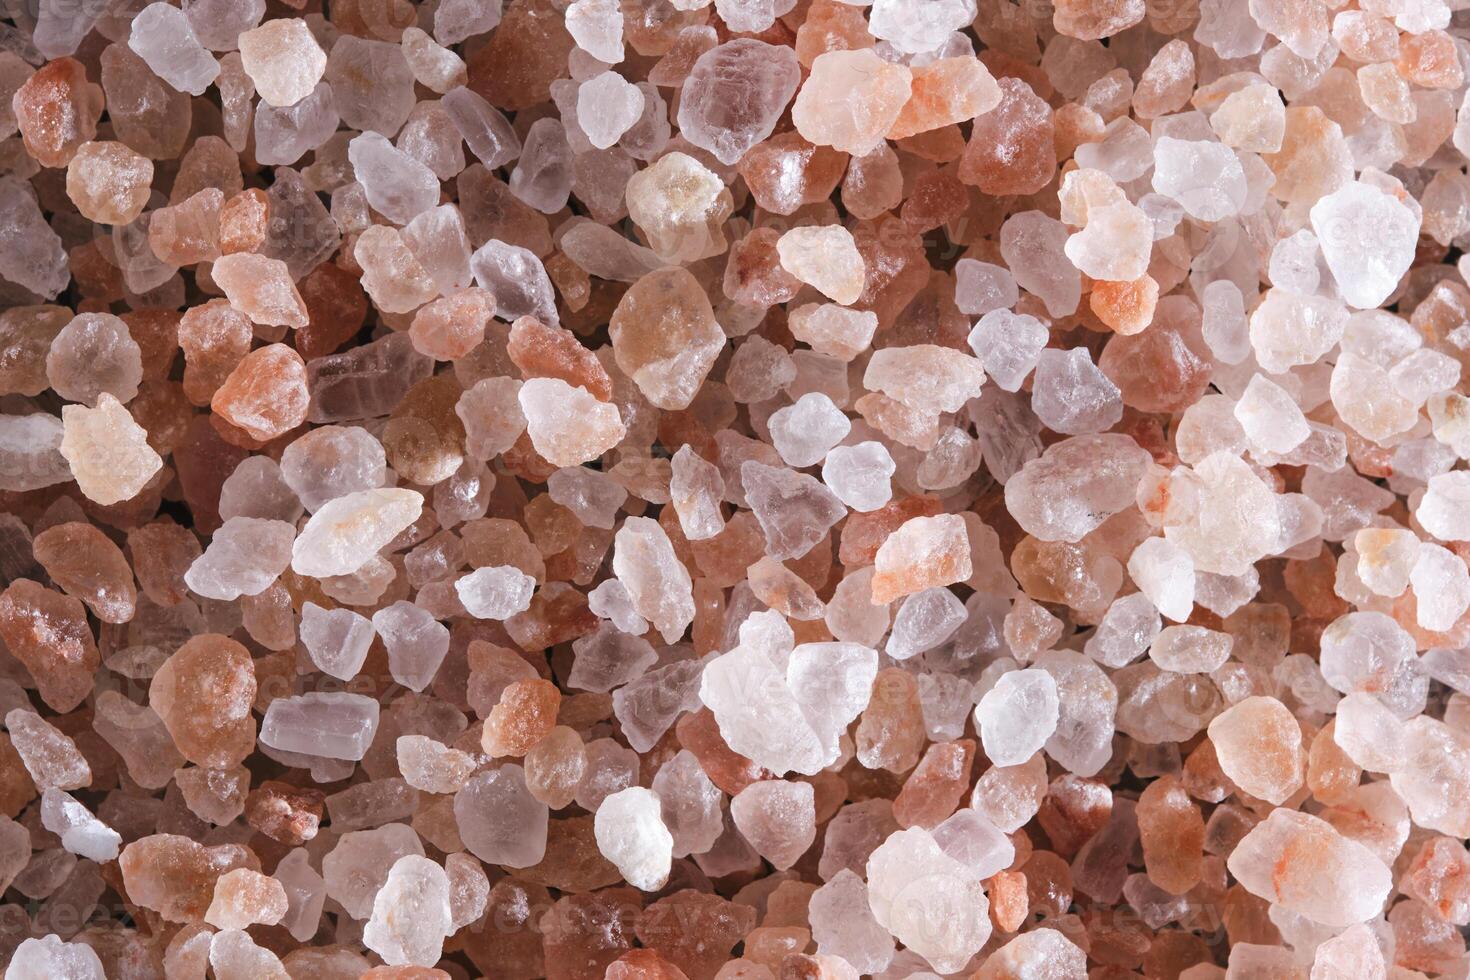 achtergrond, roze eetbaar himalayan zout detailopname. foto